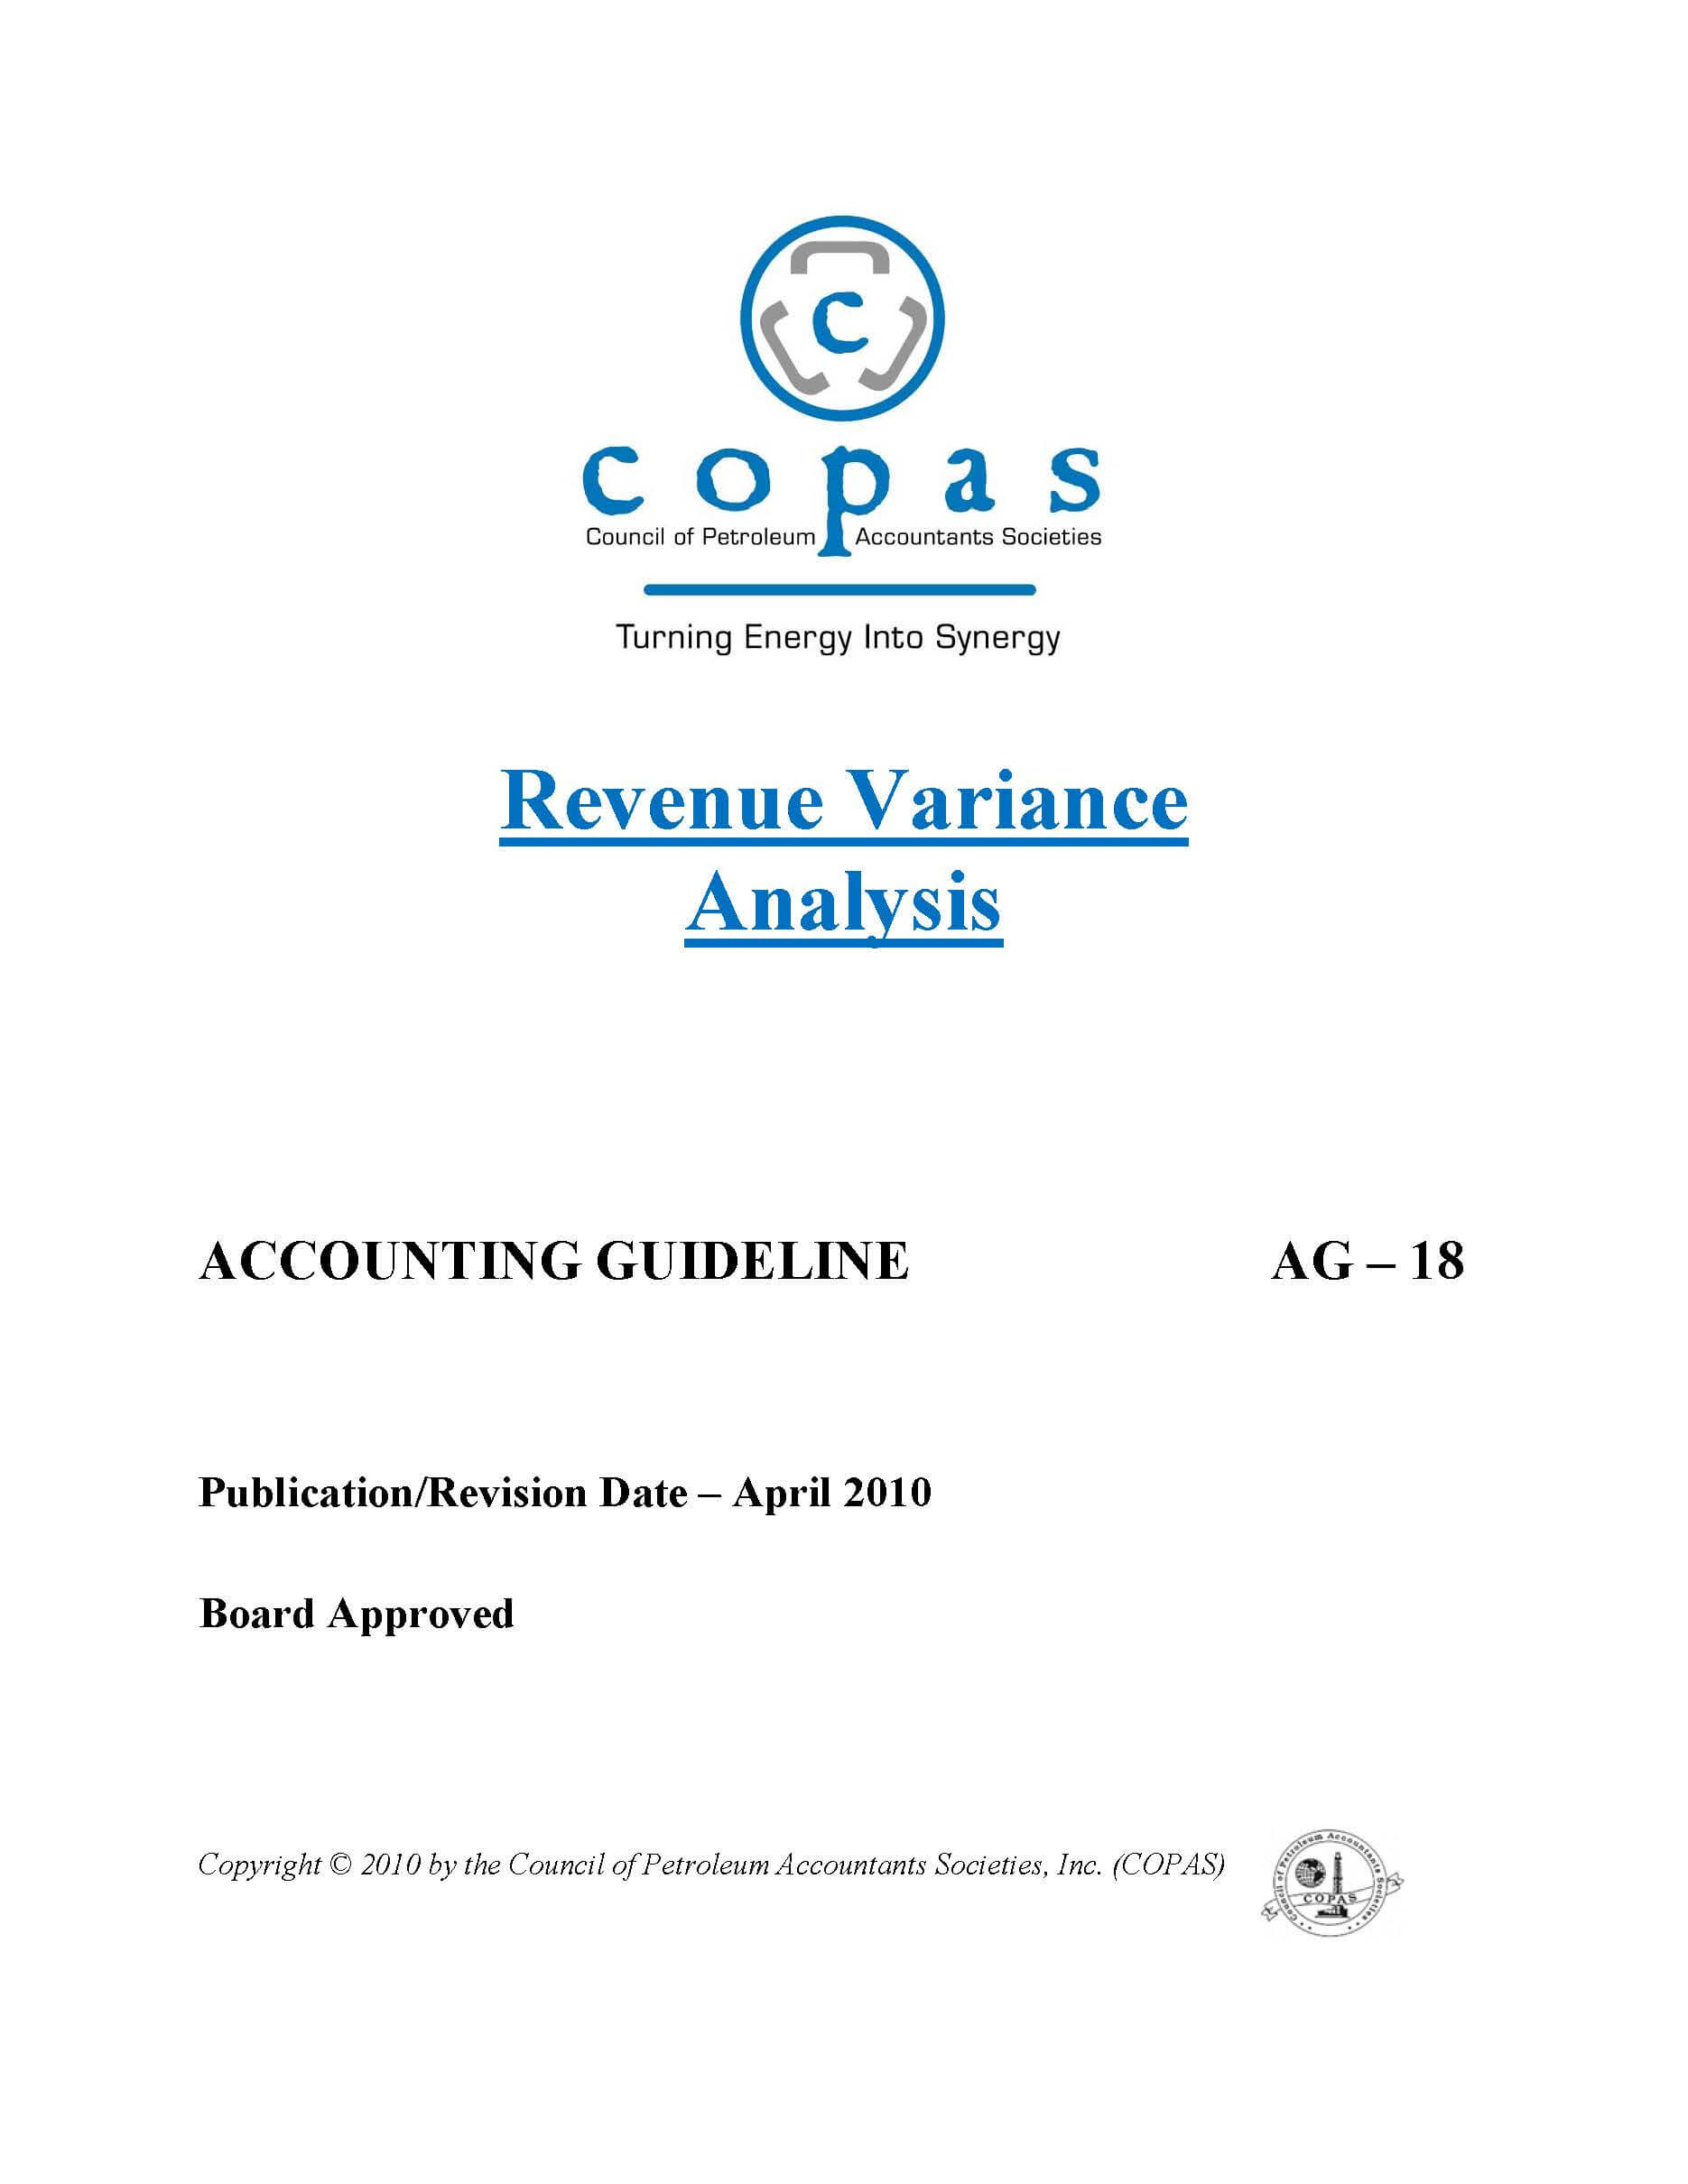 AG-18 Revenue Variance Analysis